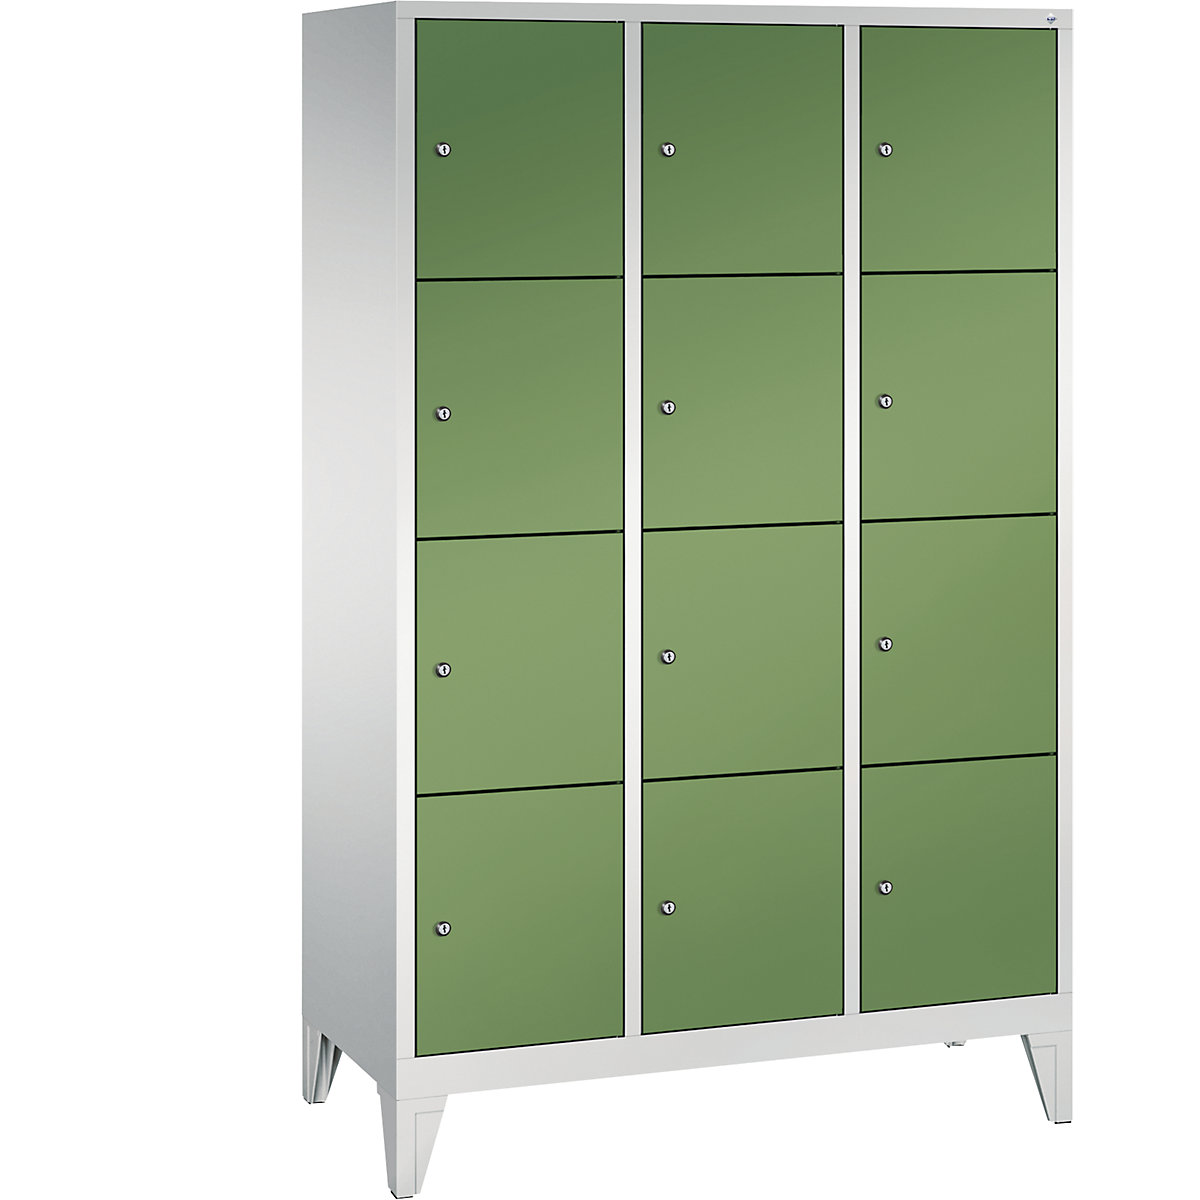 CLASSIC locker unit with feet – C+P, 3 compartments, 4 shelf compartments each, compartment width 400 mm, light grey / reseda green-12